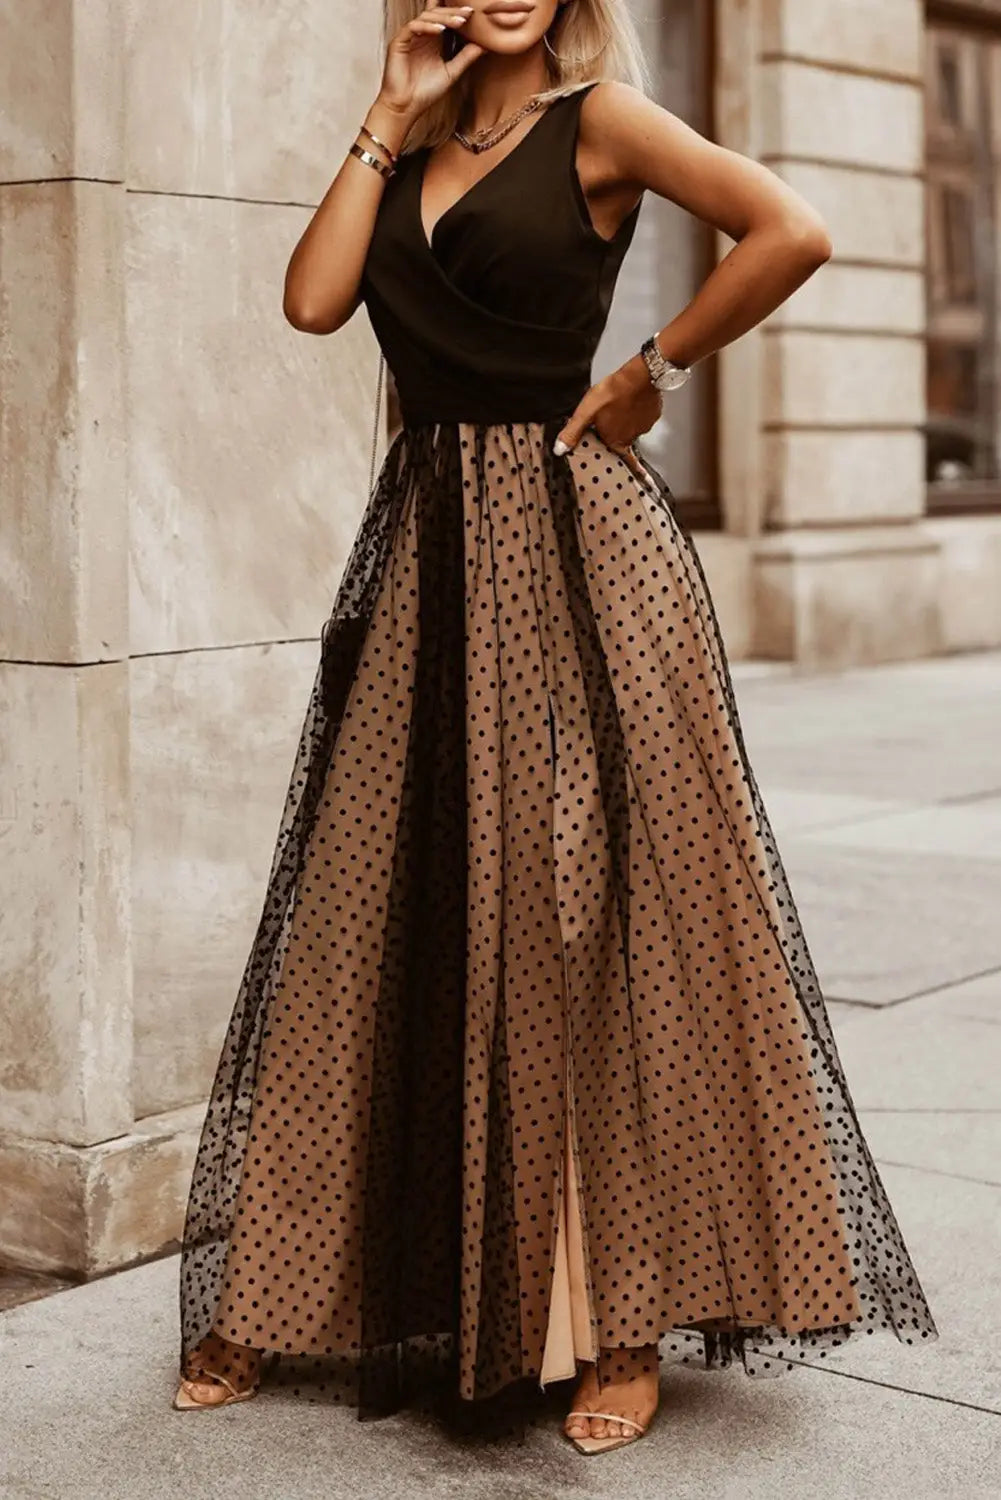 Black polka dot mesh overlay sleeveless maxi dress - dresses